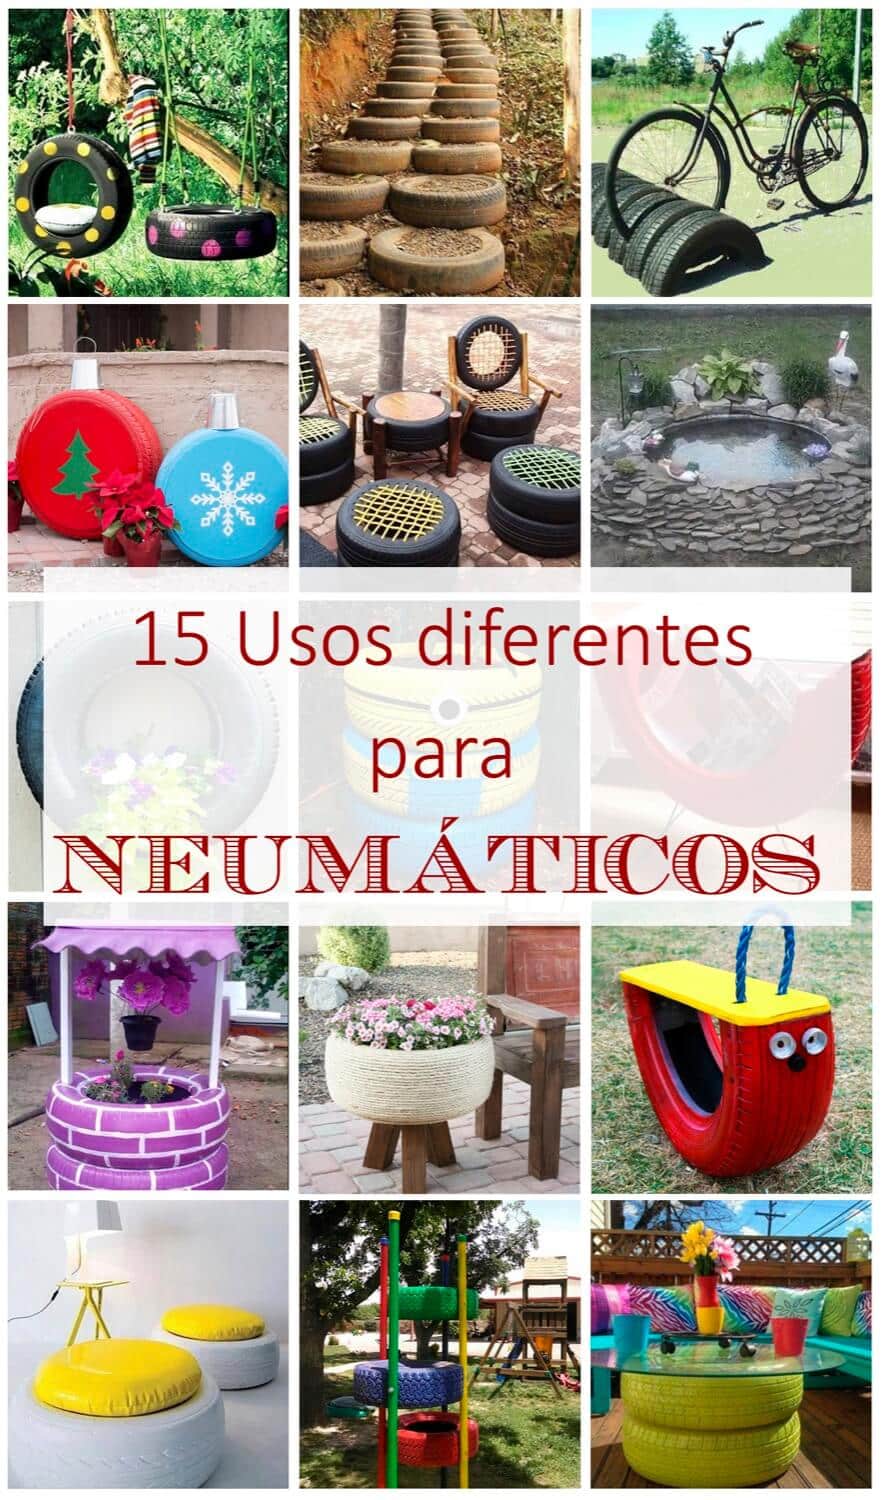 15 usos diferentes para neumaticos  · Ideas sencillas para reciclar neumáticos viejos  · Via www.sweethings.net